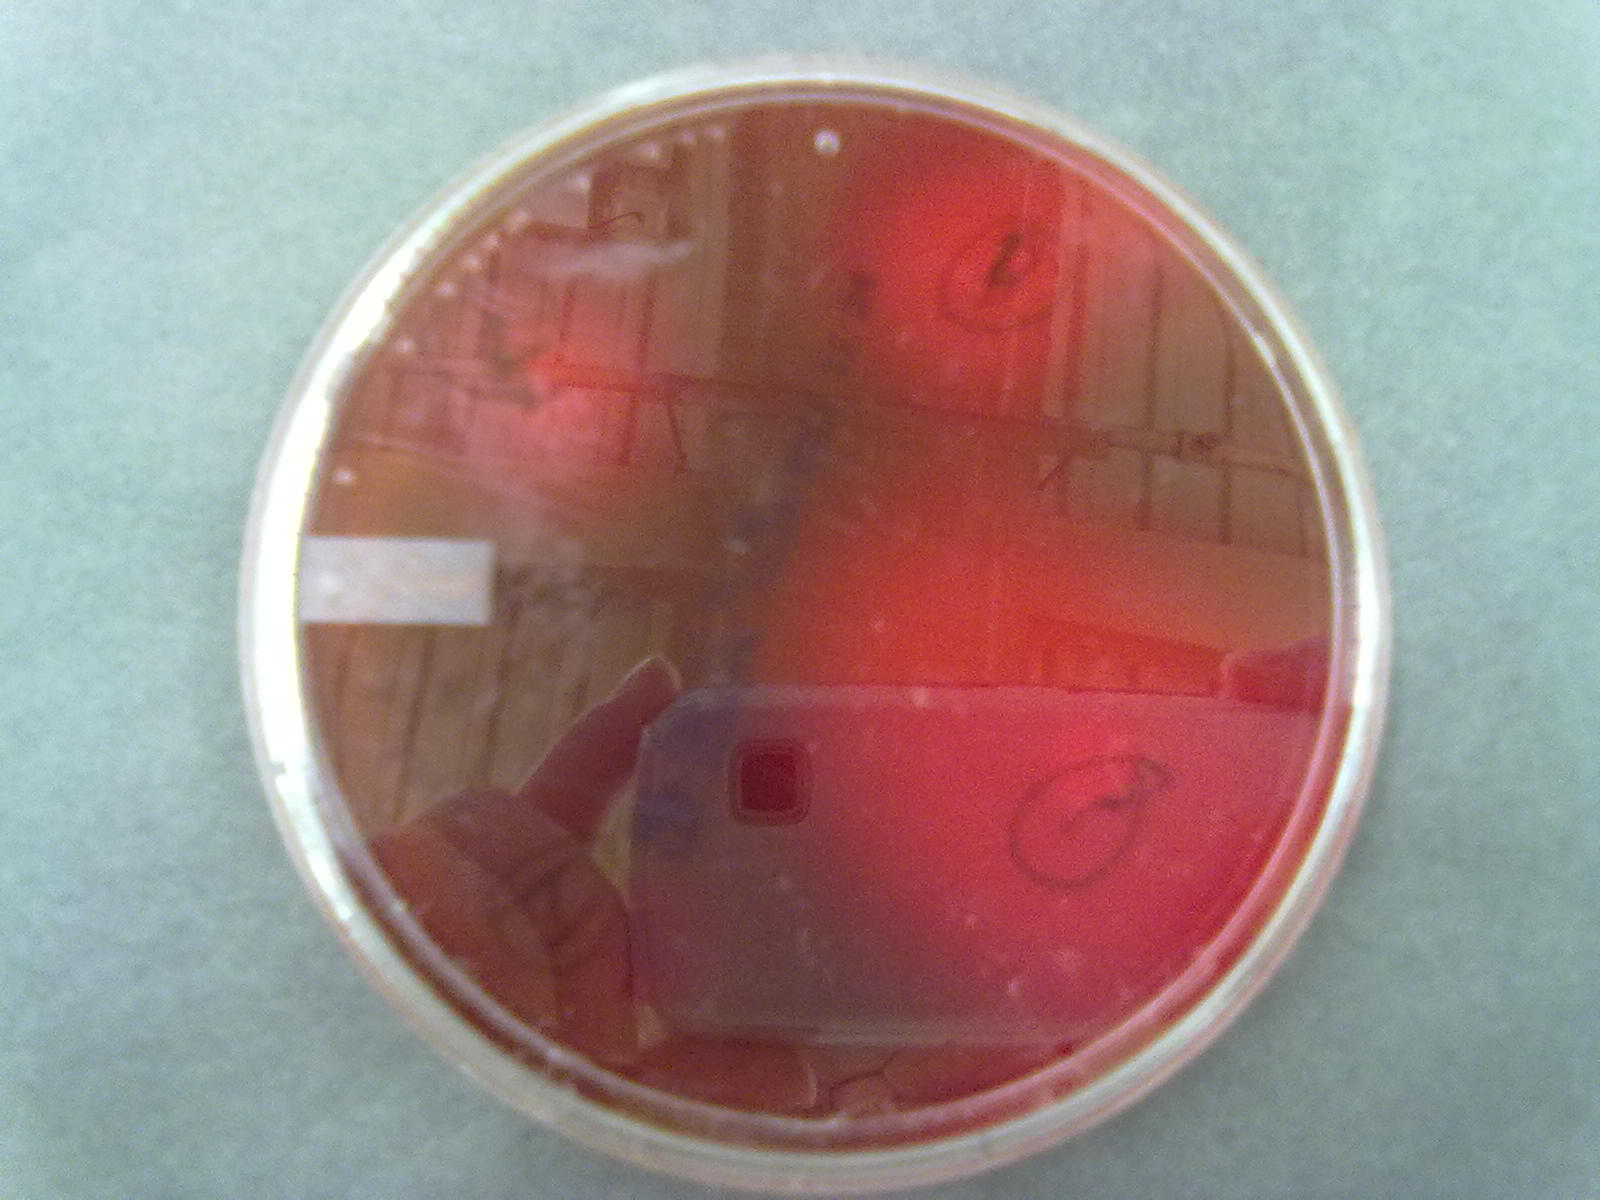 Staphylococcus Aureus Does What On Mannitol Salt Agar